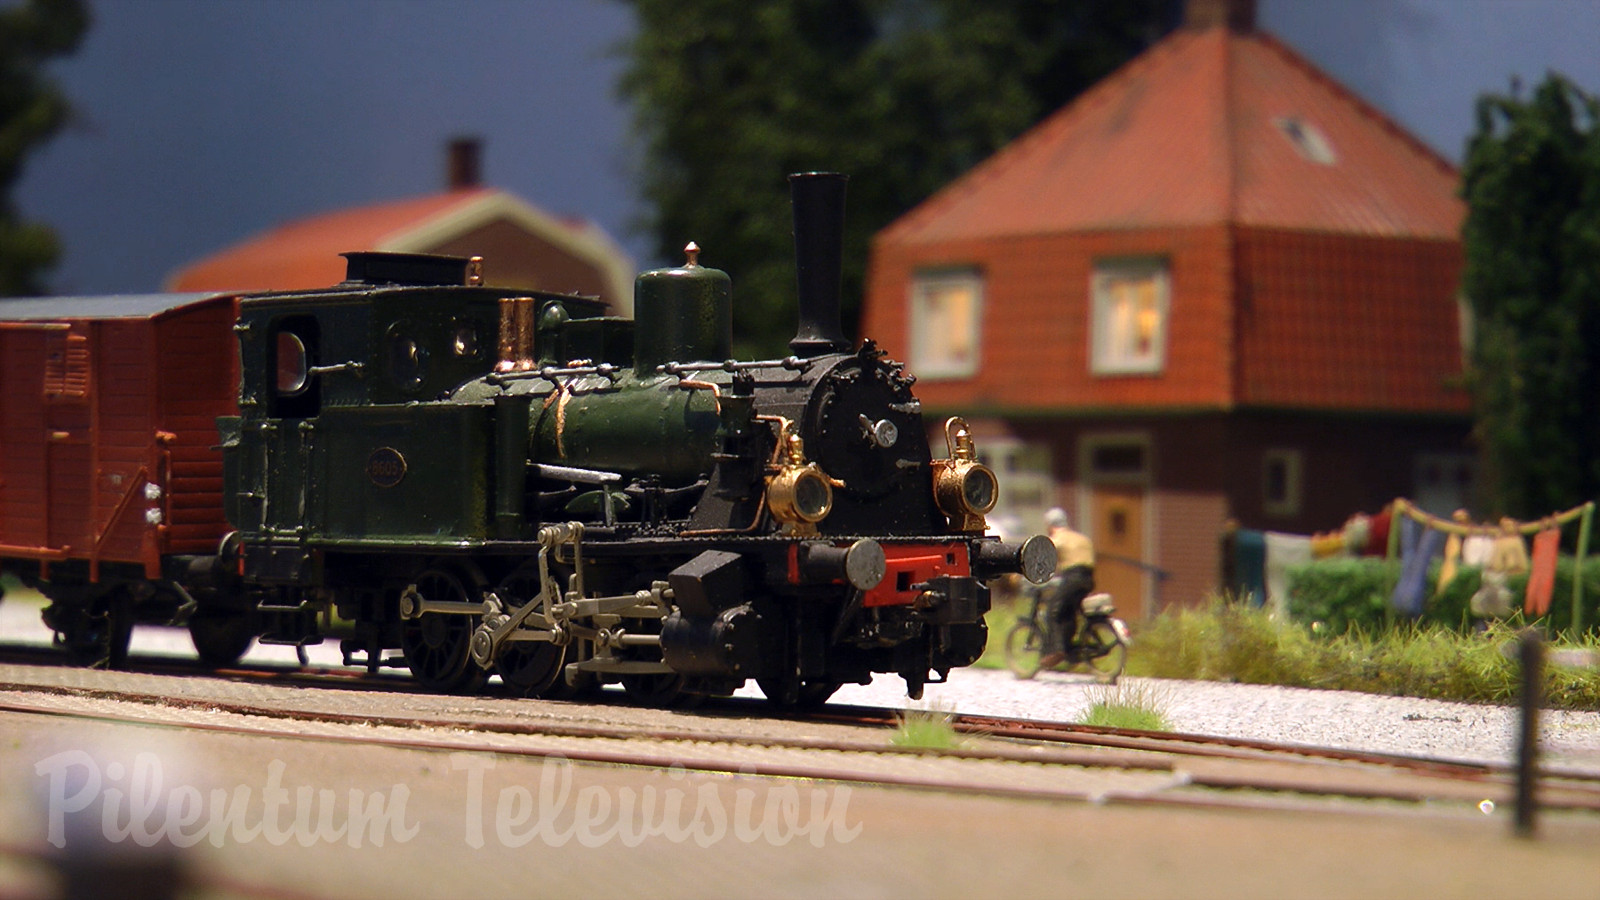 Model Railway Layout Berkeldam - A Dutch masterpiece of model railroading by Paul Roodbol